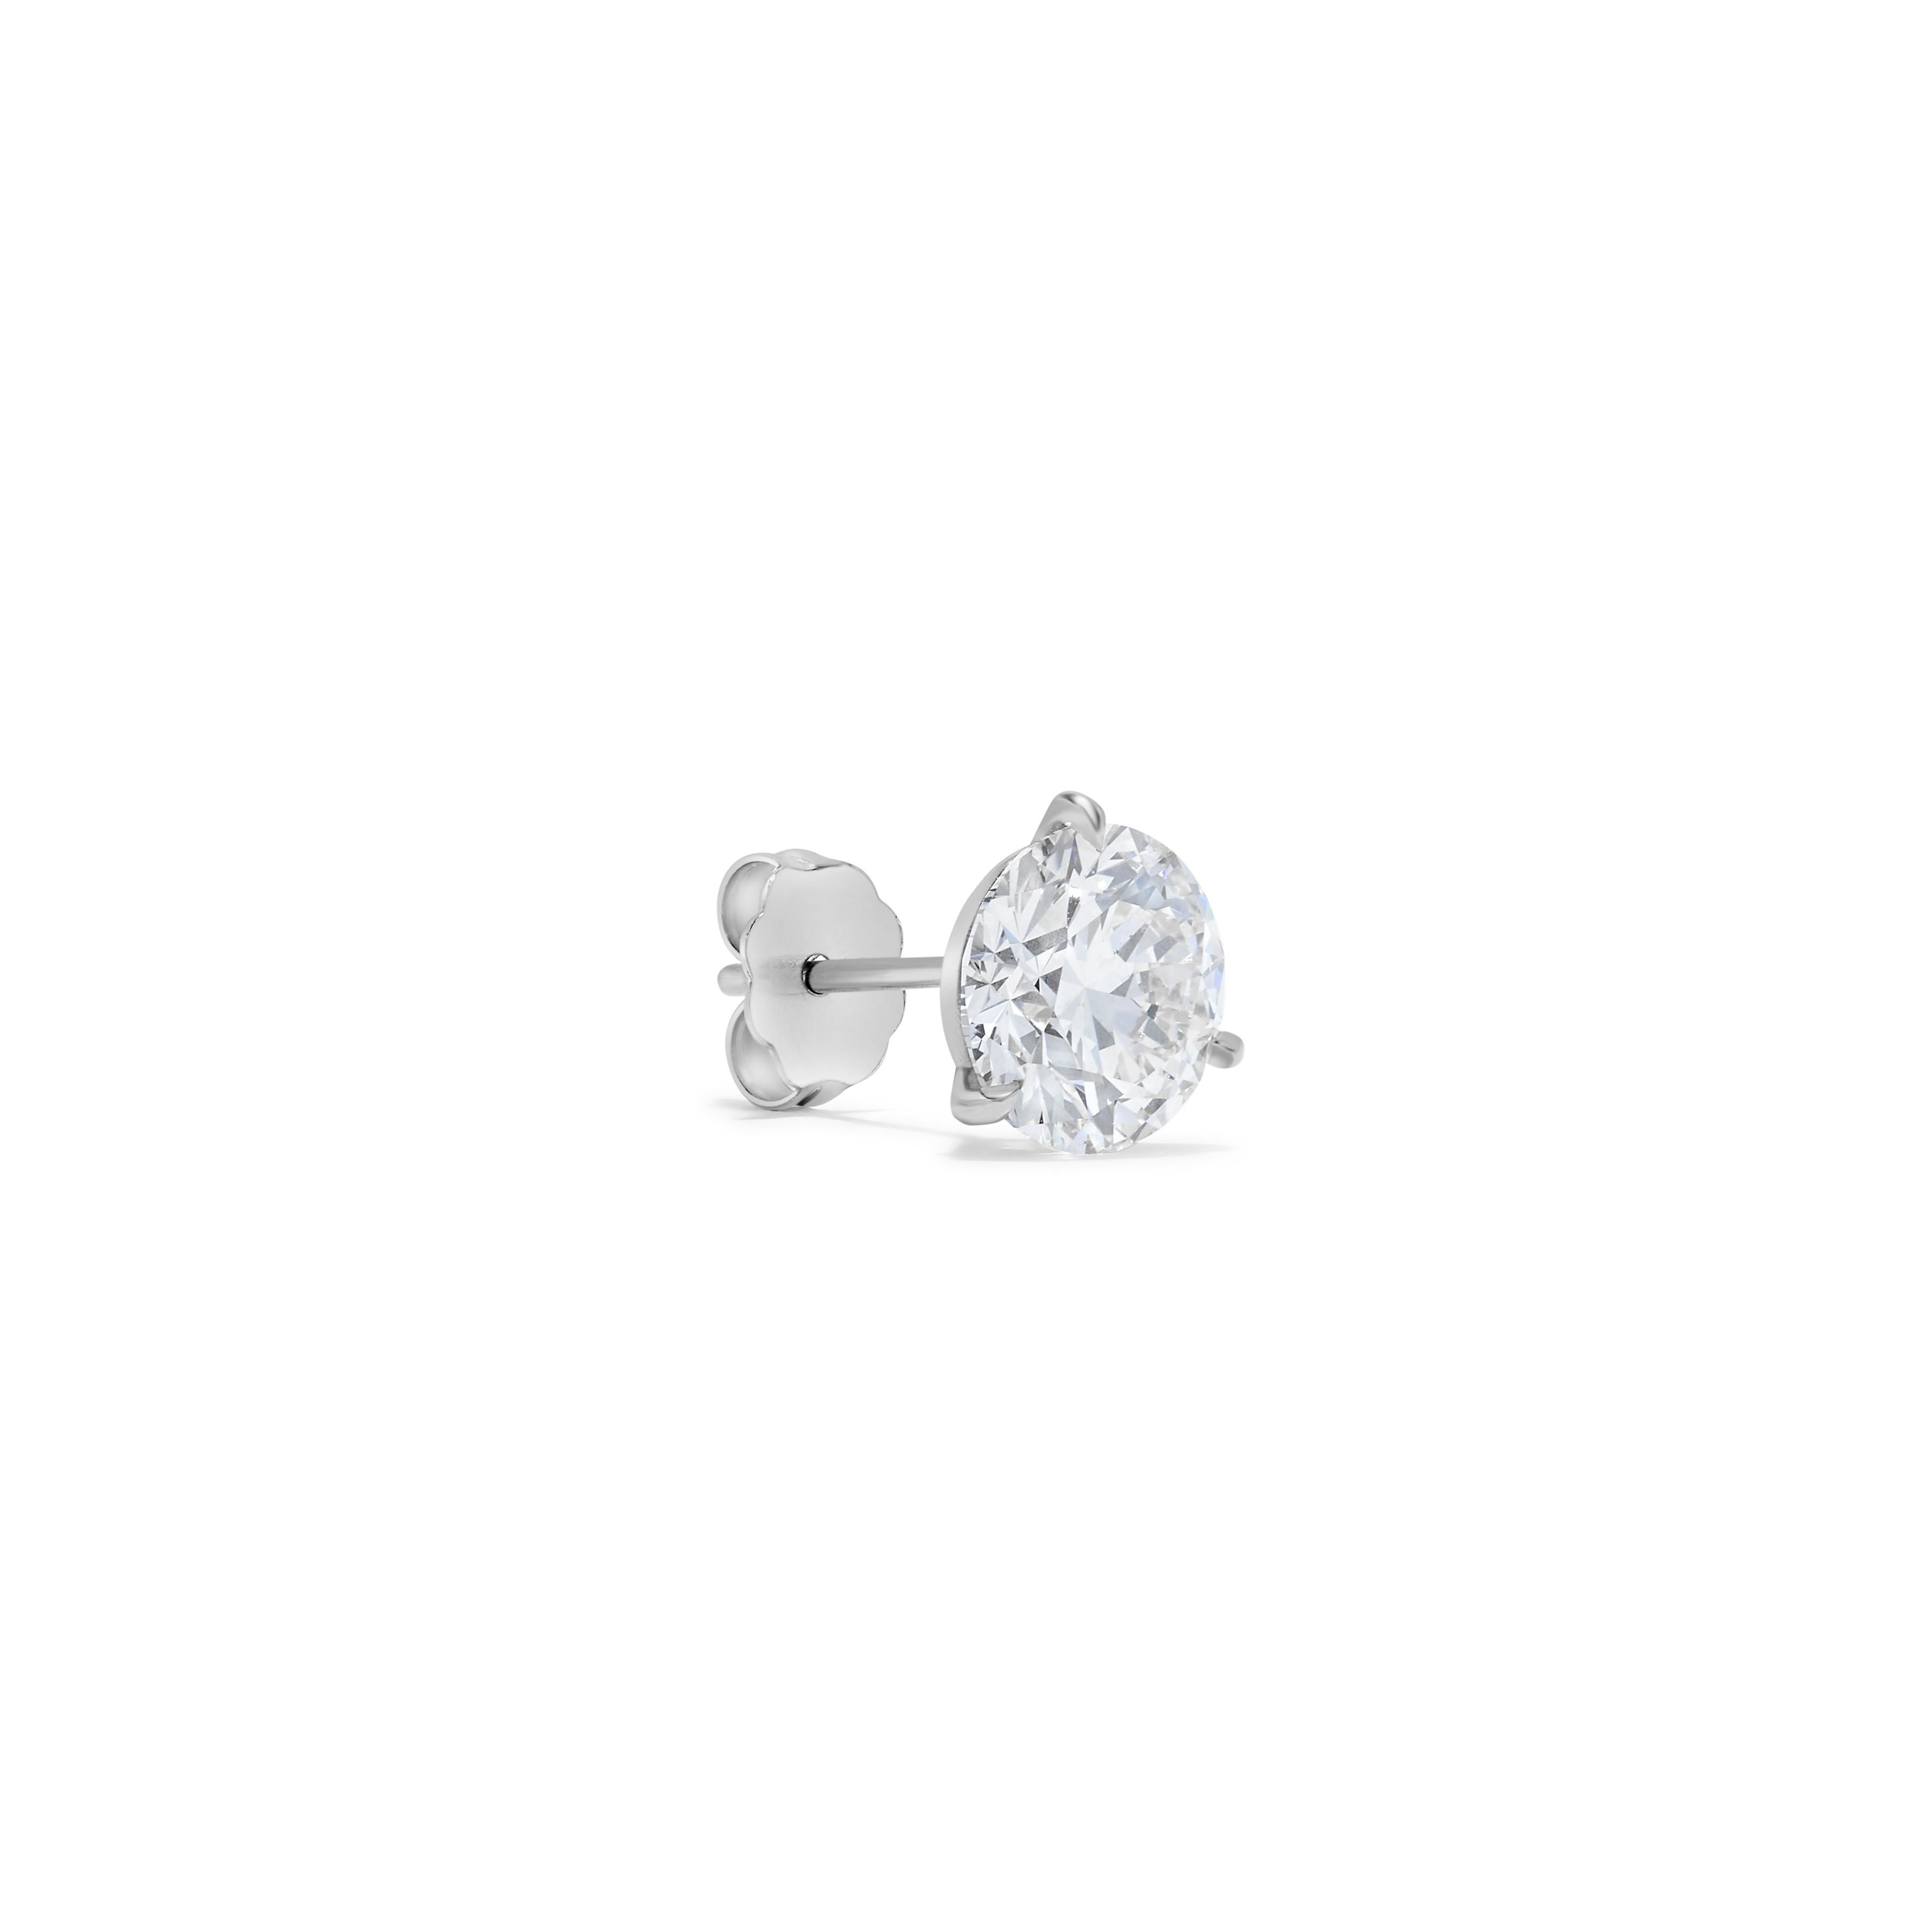 Round Cut 4.04 Carat GIA Certified Diamond Stud Earrings For Sale